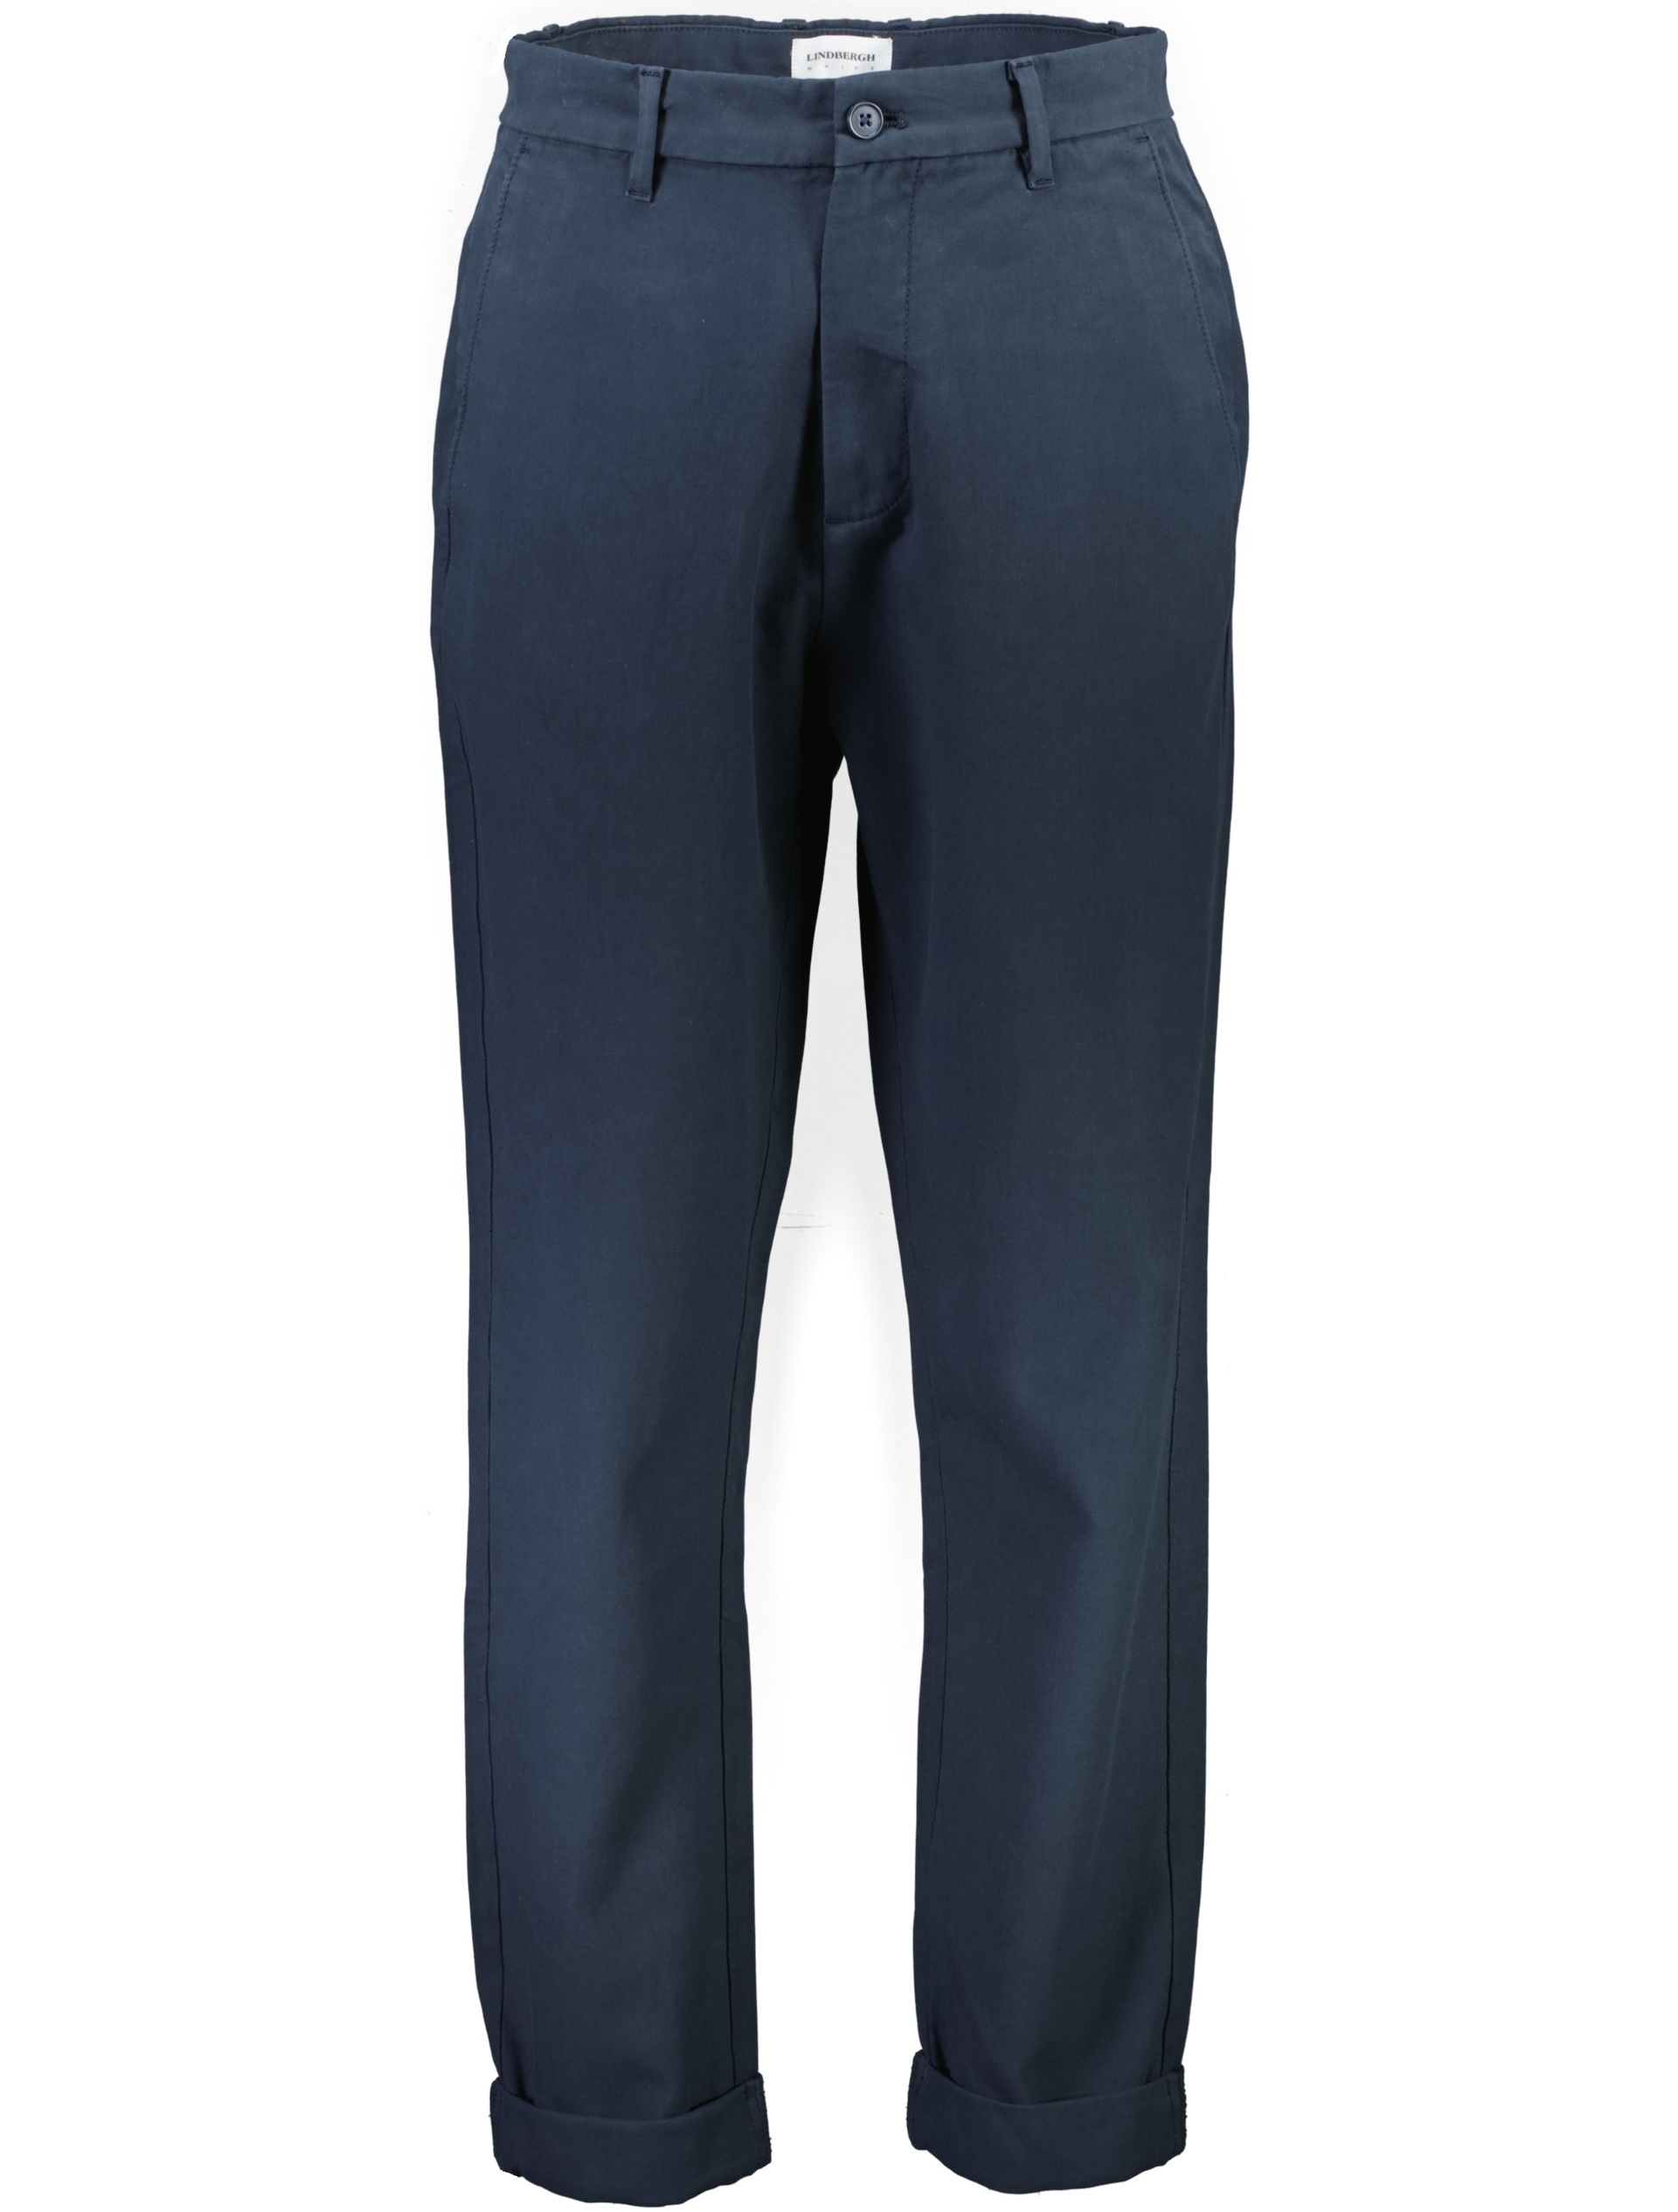 Lindbergh Casual pants blue / navy